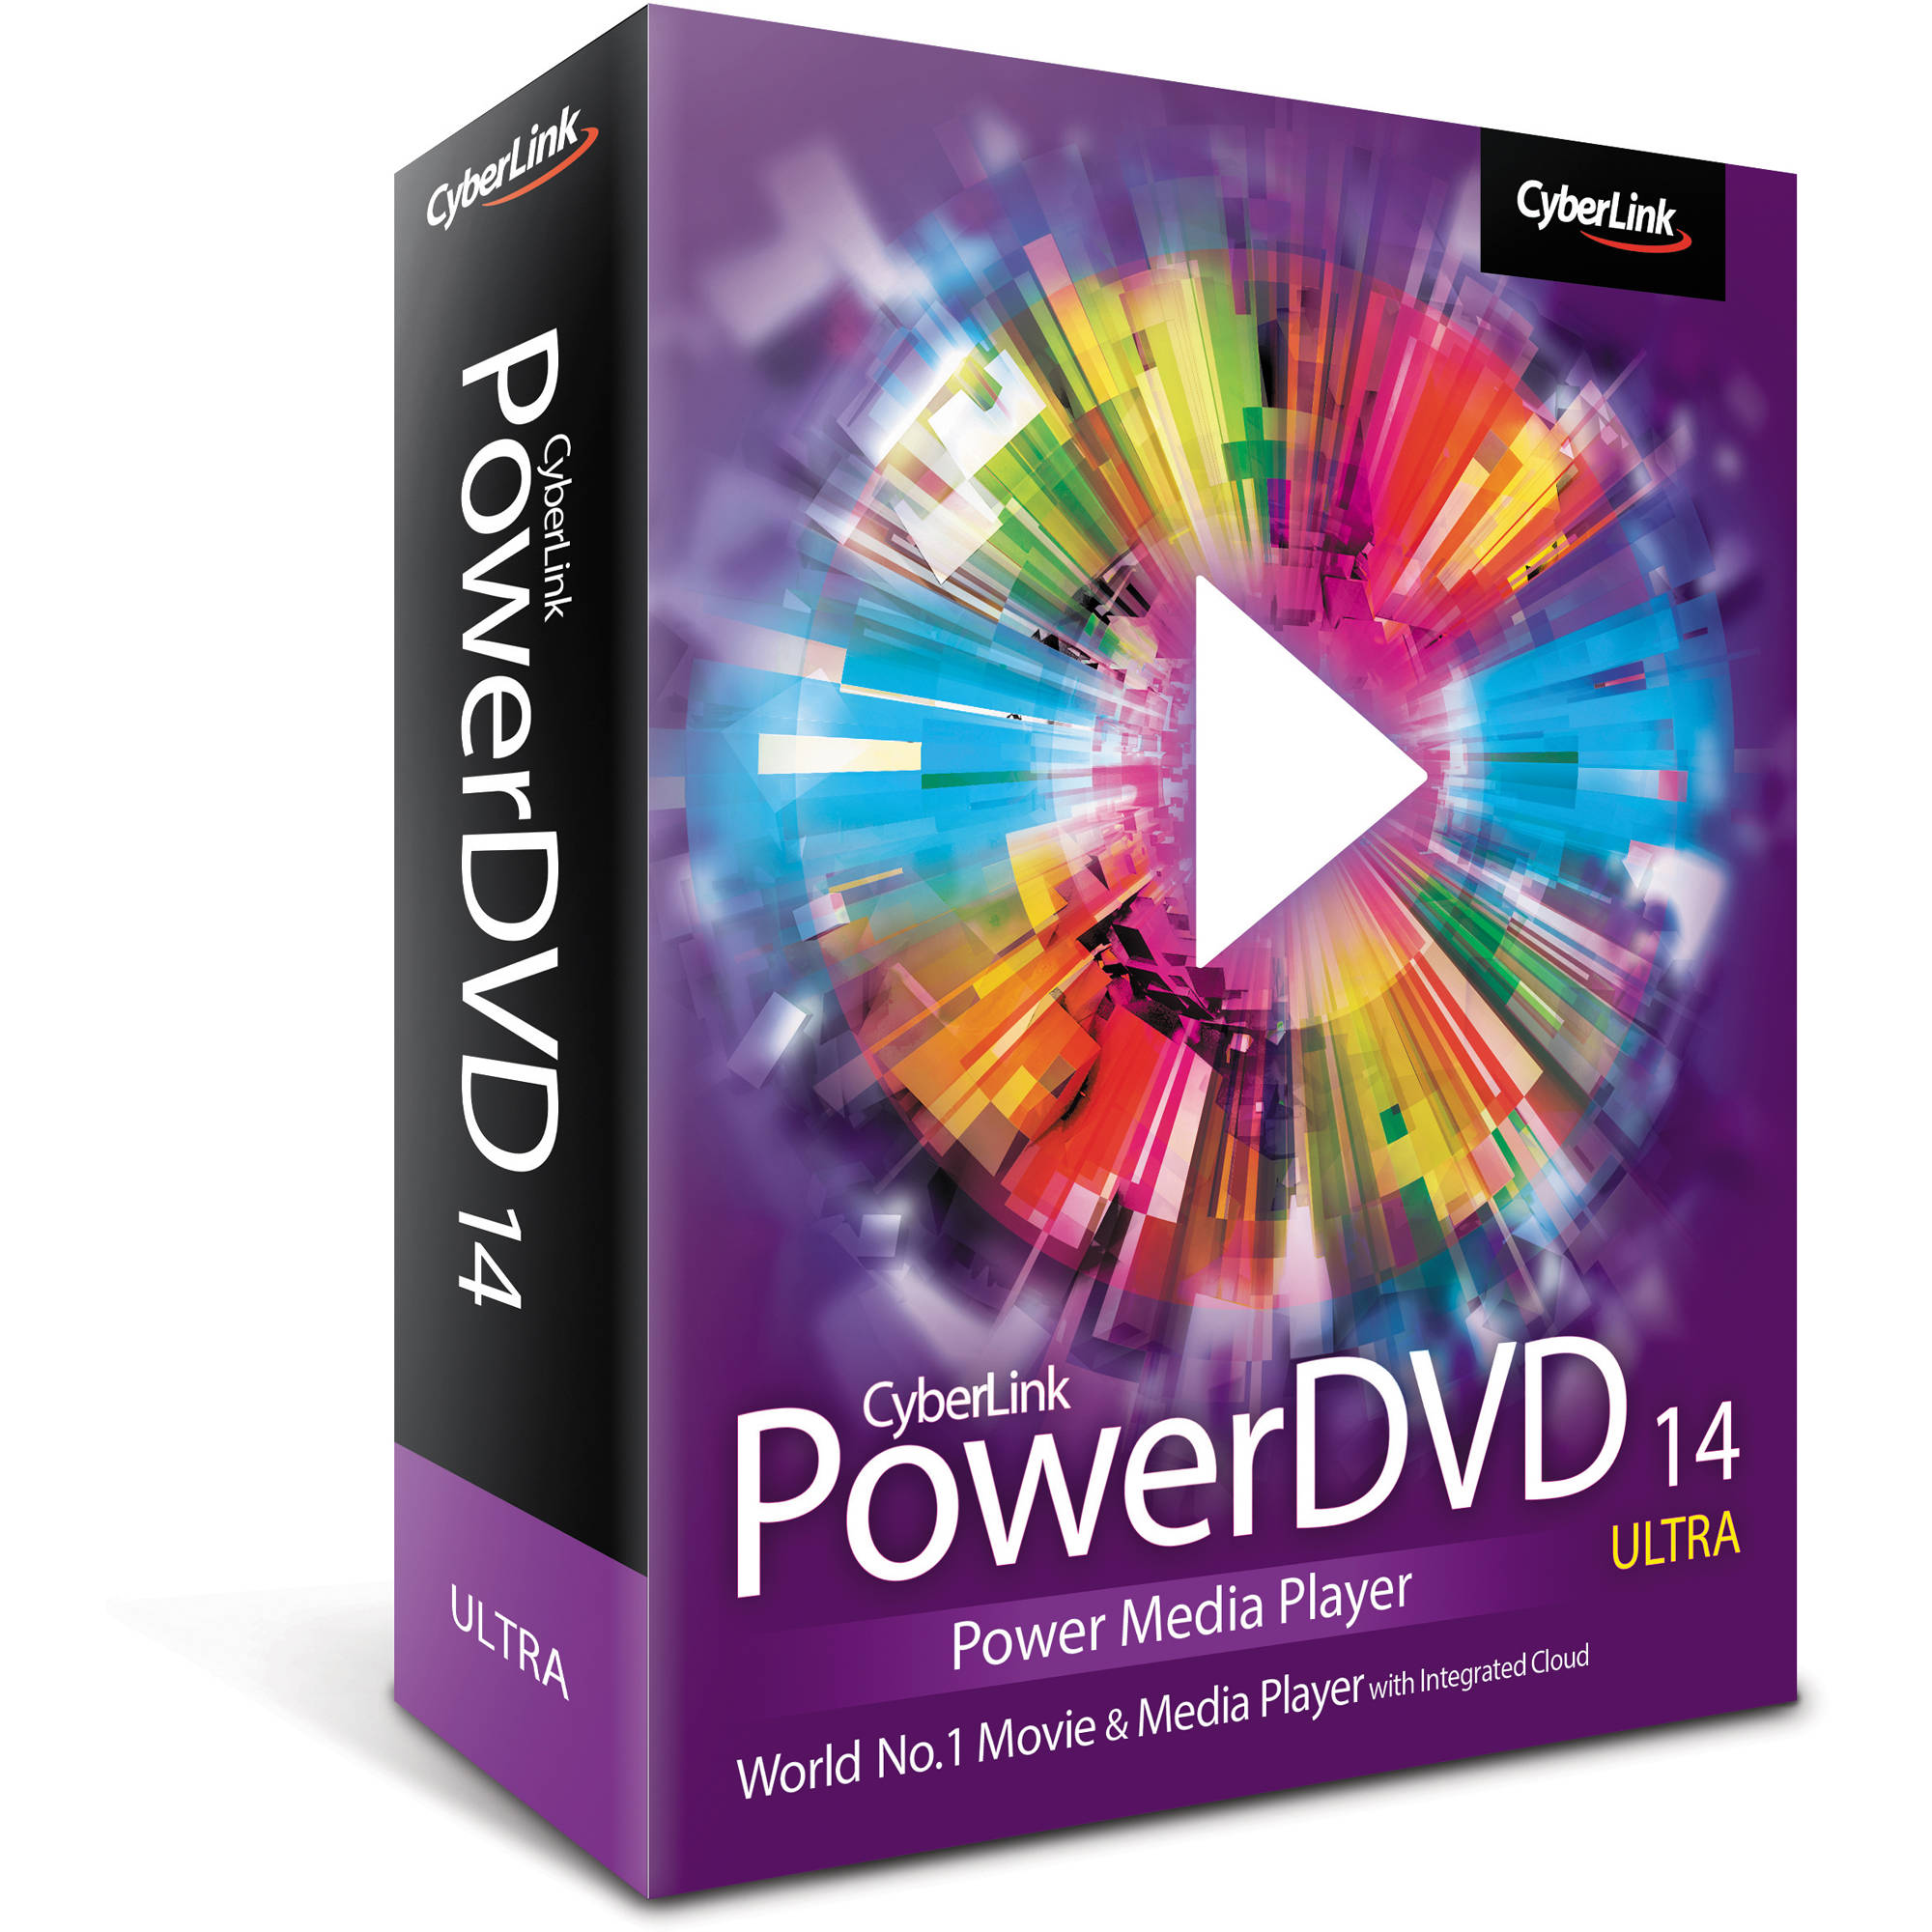 Cyberlink Powerdvd 14 Ultra Power Media Player Dvd Ee00 Rpu0 00